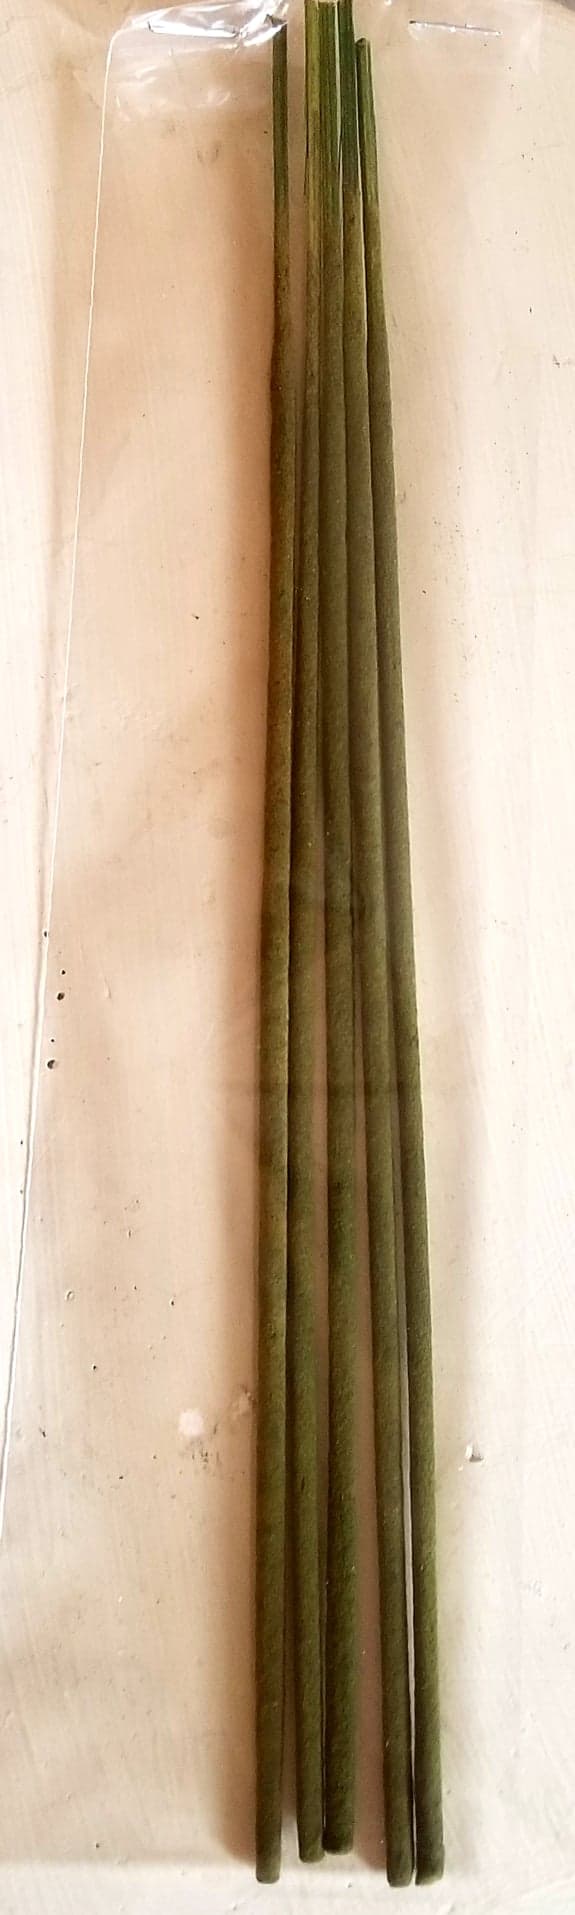 Sensual Stick Incense (5pk)